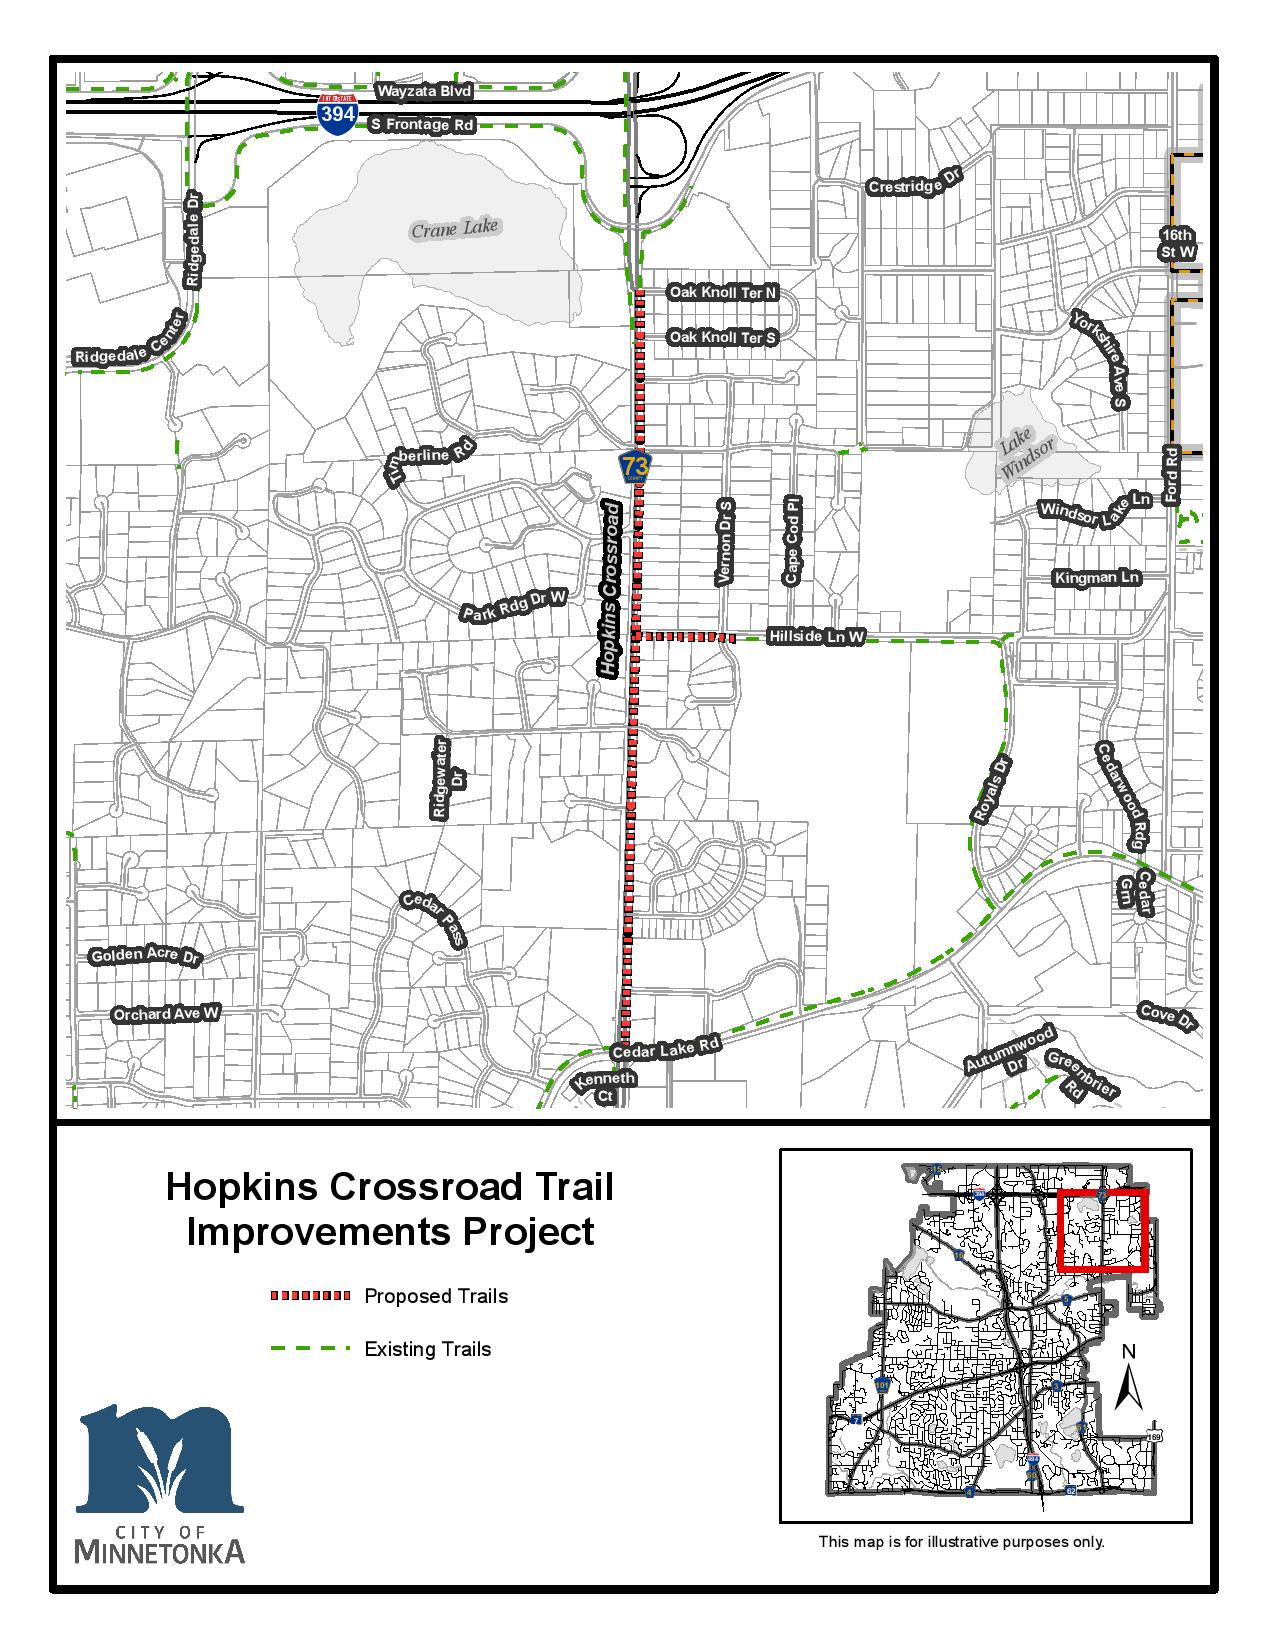 Hopkins Crossroads Trail Project